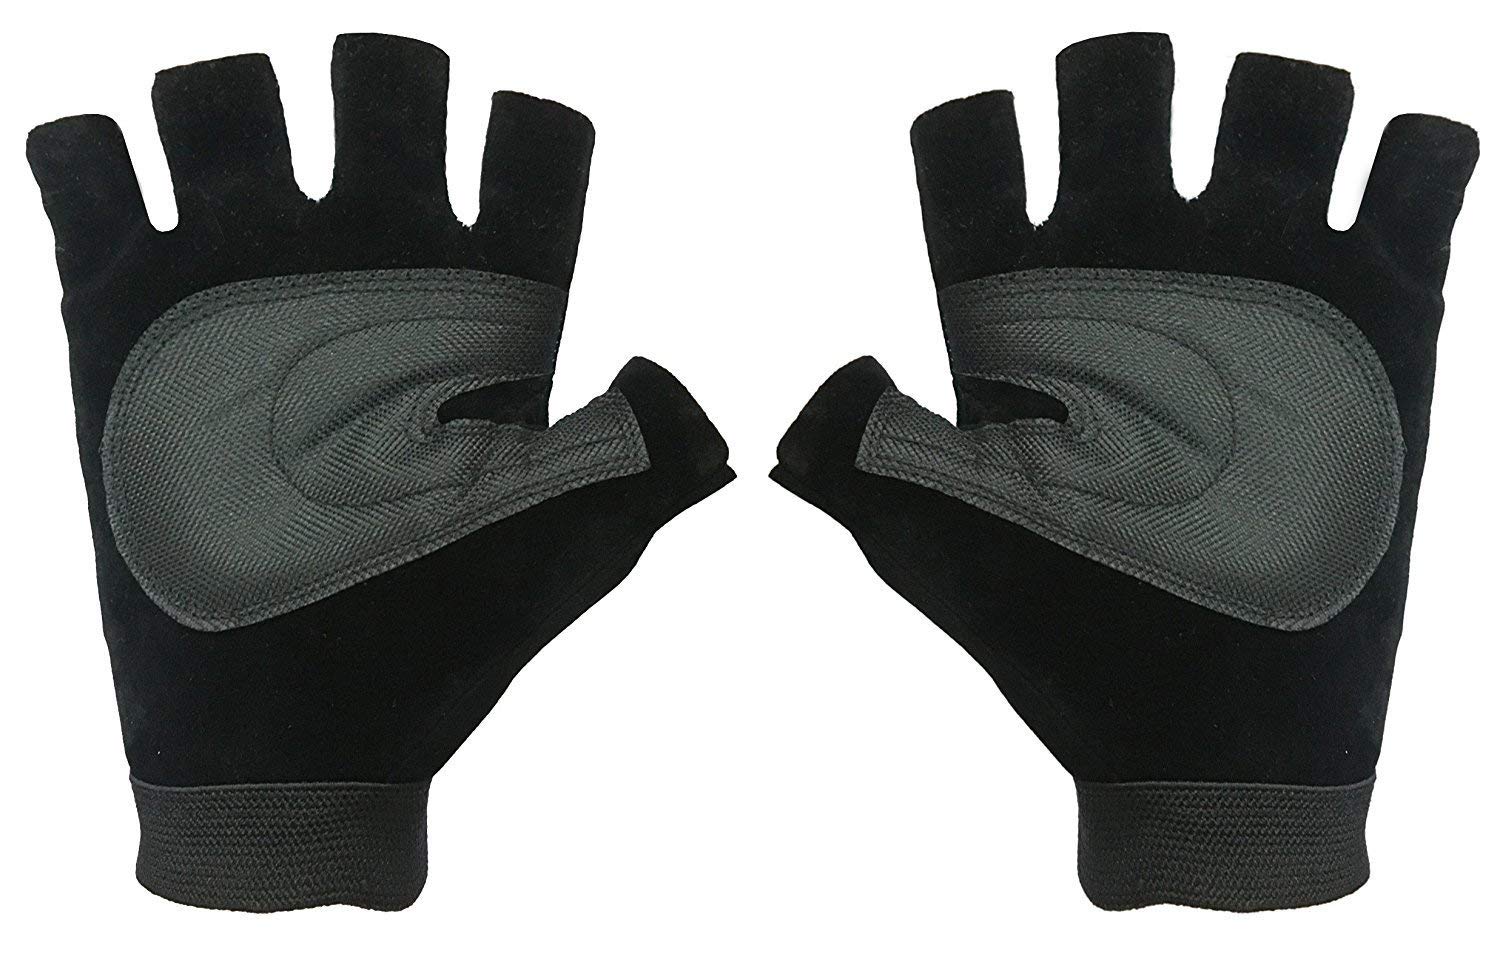 Strauss Cycling Gloves, Medium, (Black/Blue)